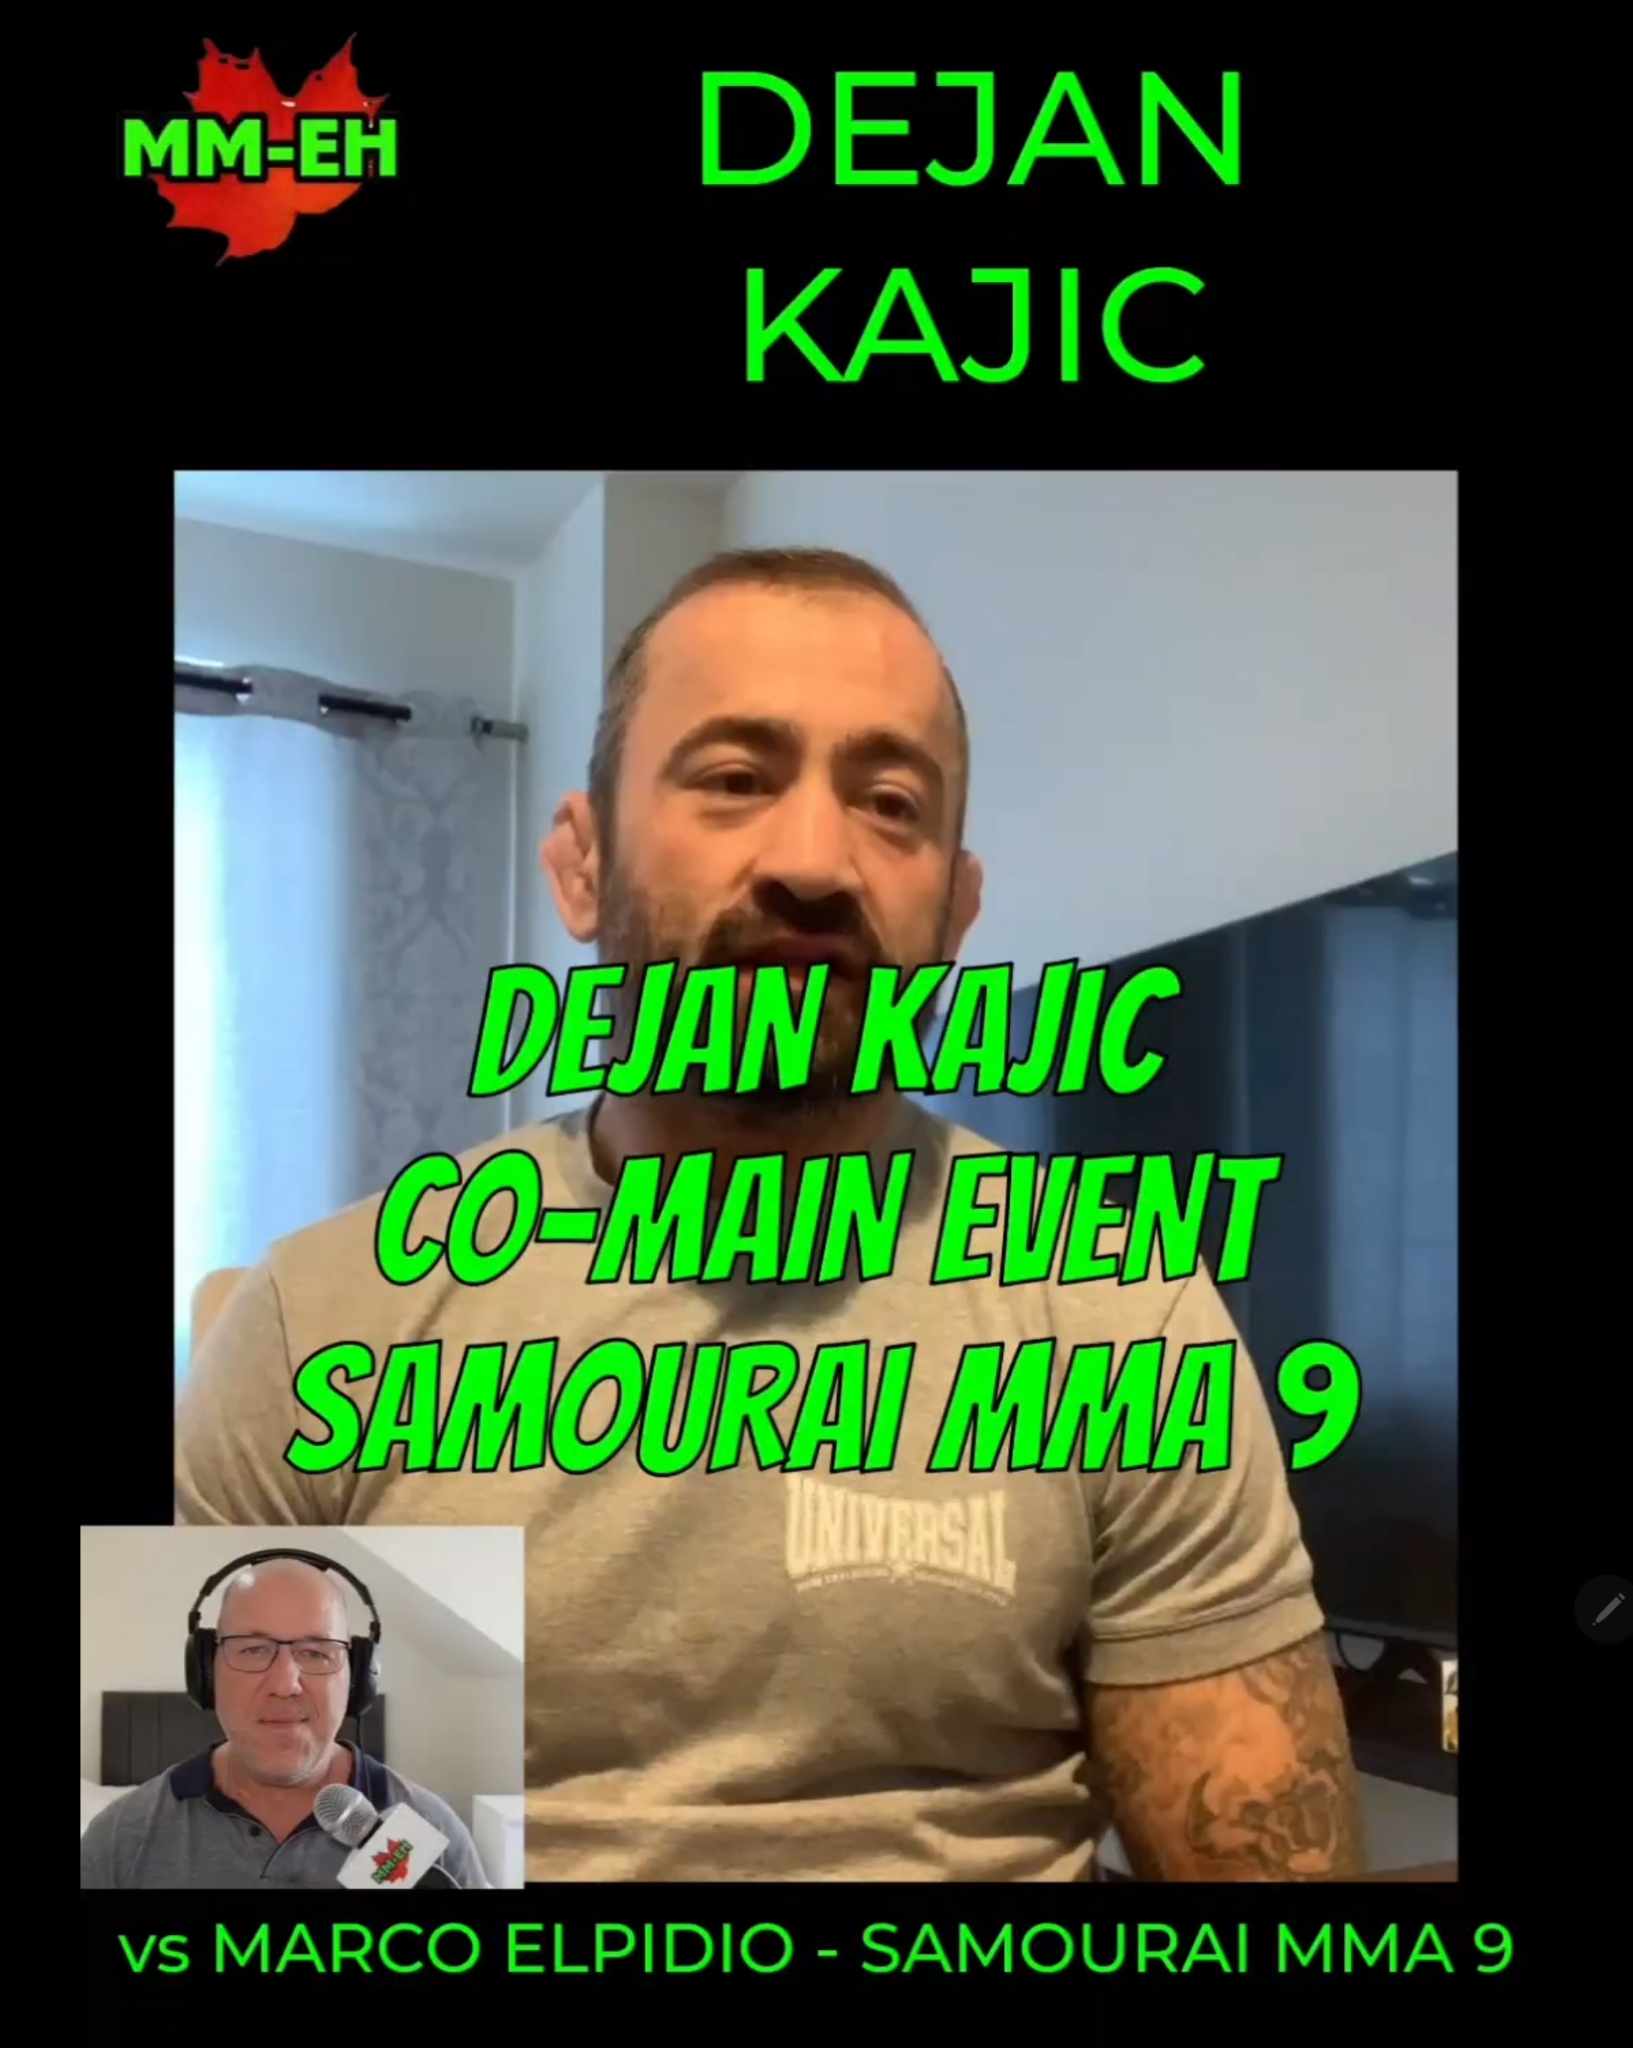 VIDEO: Dejan Kajić Talks Co-Main Event vs Jonathan Ramsay at Samourai MMA 9